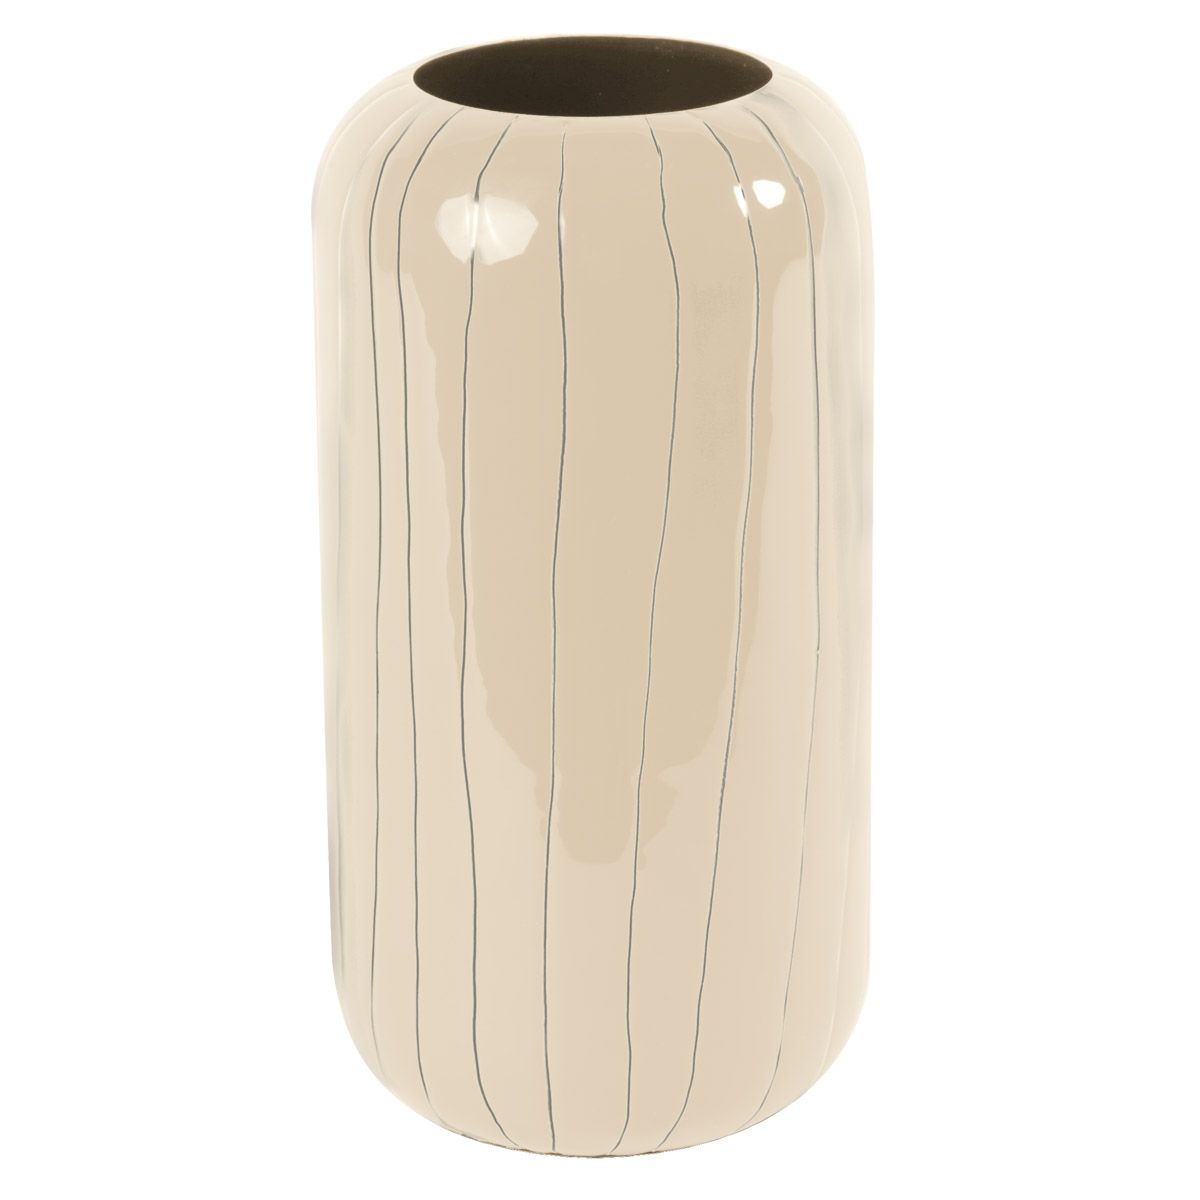 Vase moderne scandinave métal émaillé beige rayé kaki h 26 cm